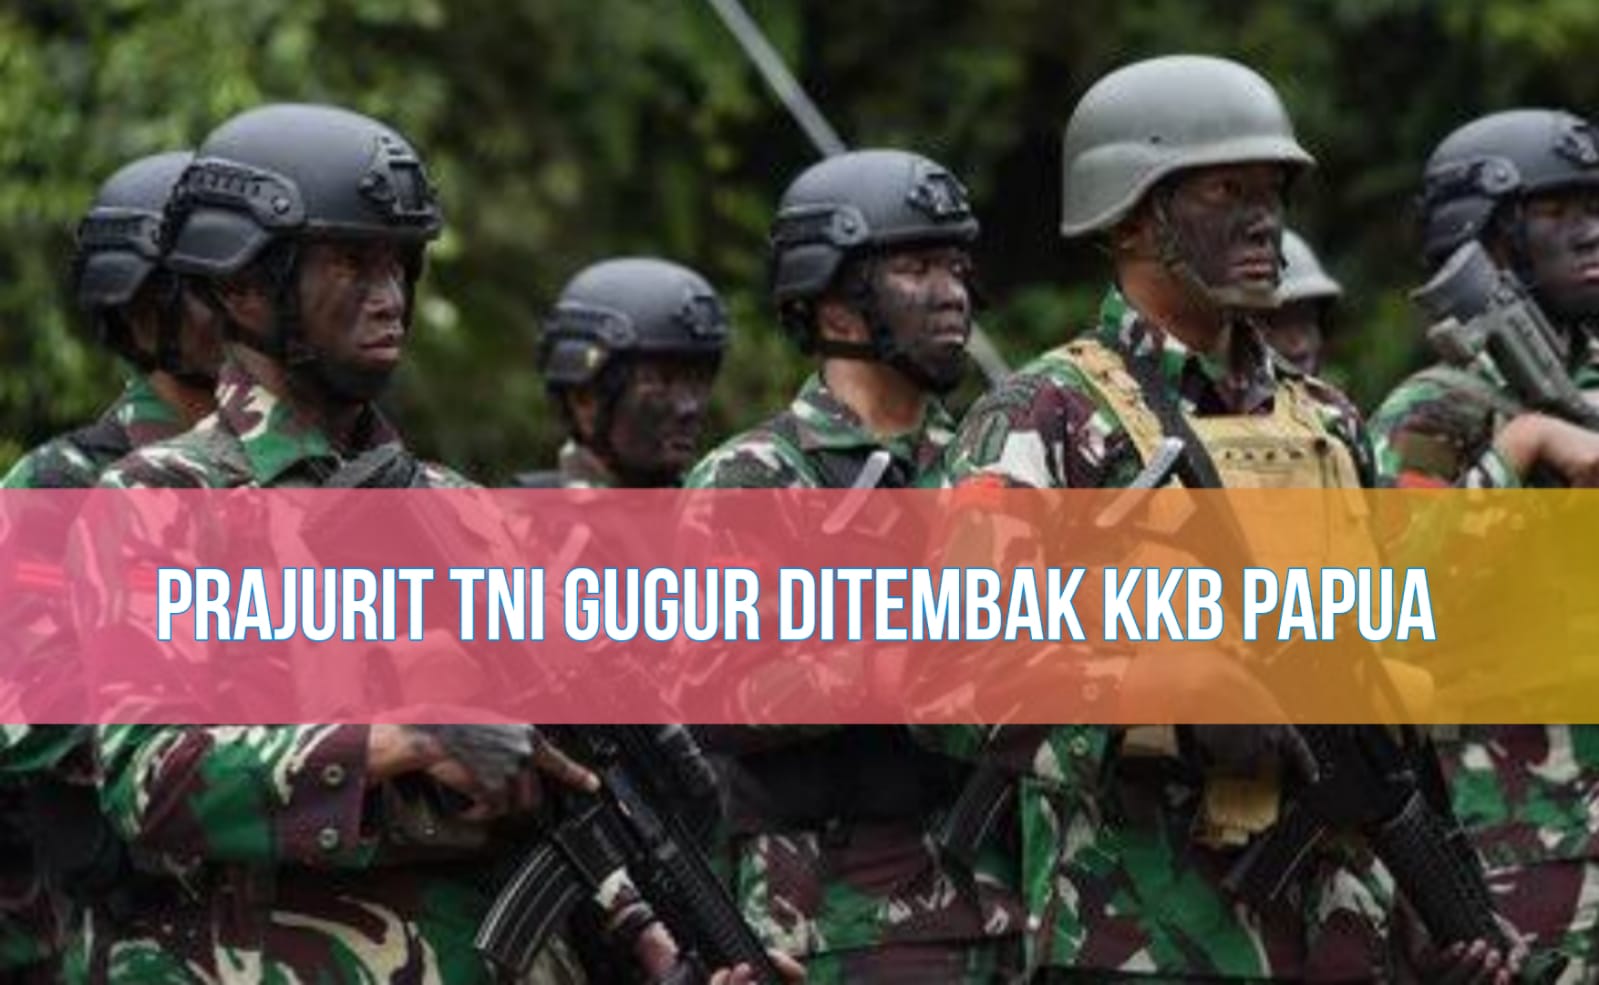 Prajurit TNI yang Gugur Ditembak KKB Papua, Ternyata Baru Menikah Seminggu Sebelum Bertugas